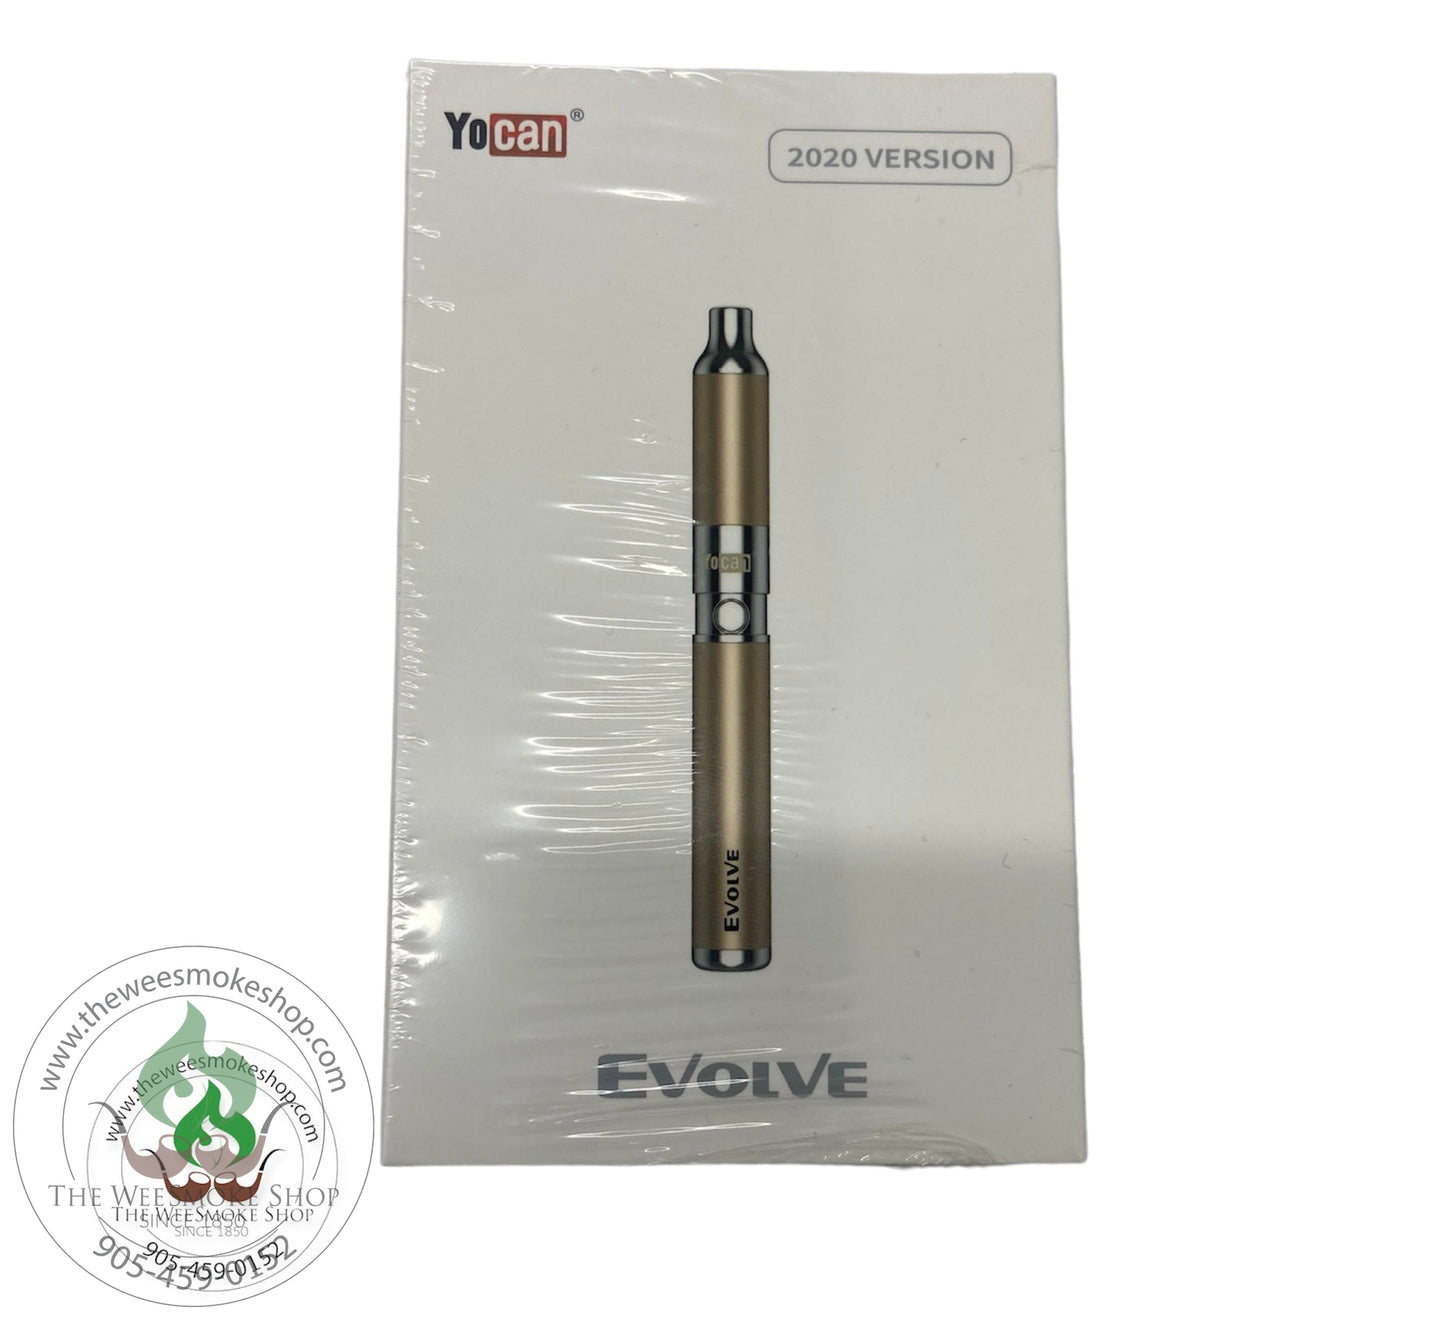 Copper Yocan Evolve Wax Aromatherapy Inhaler (Portable) - Wee Smoke Shop